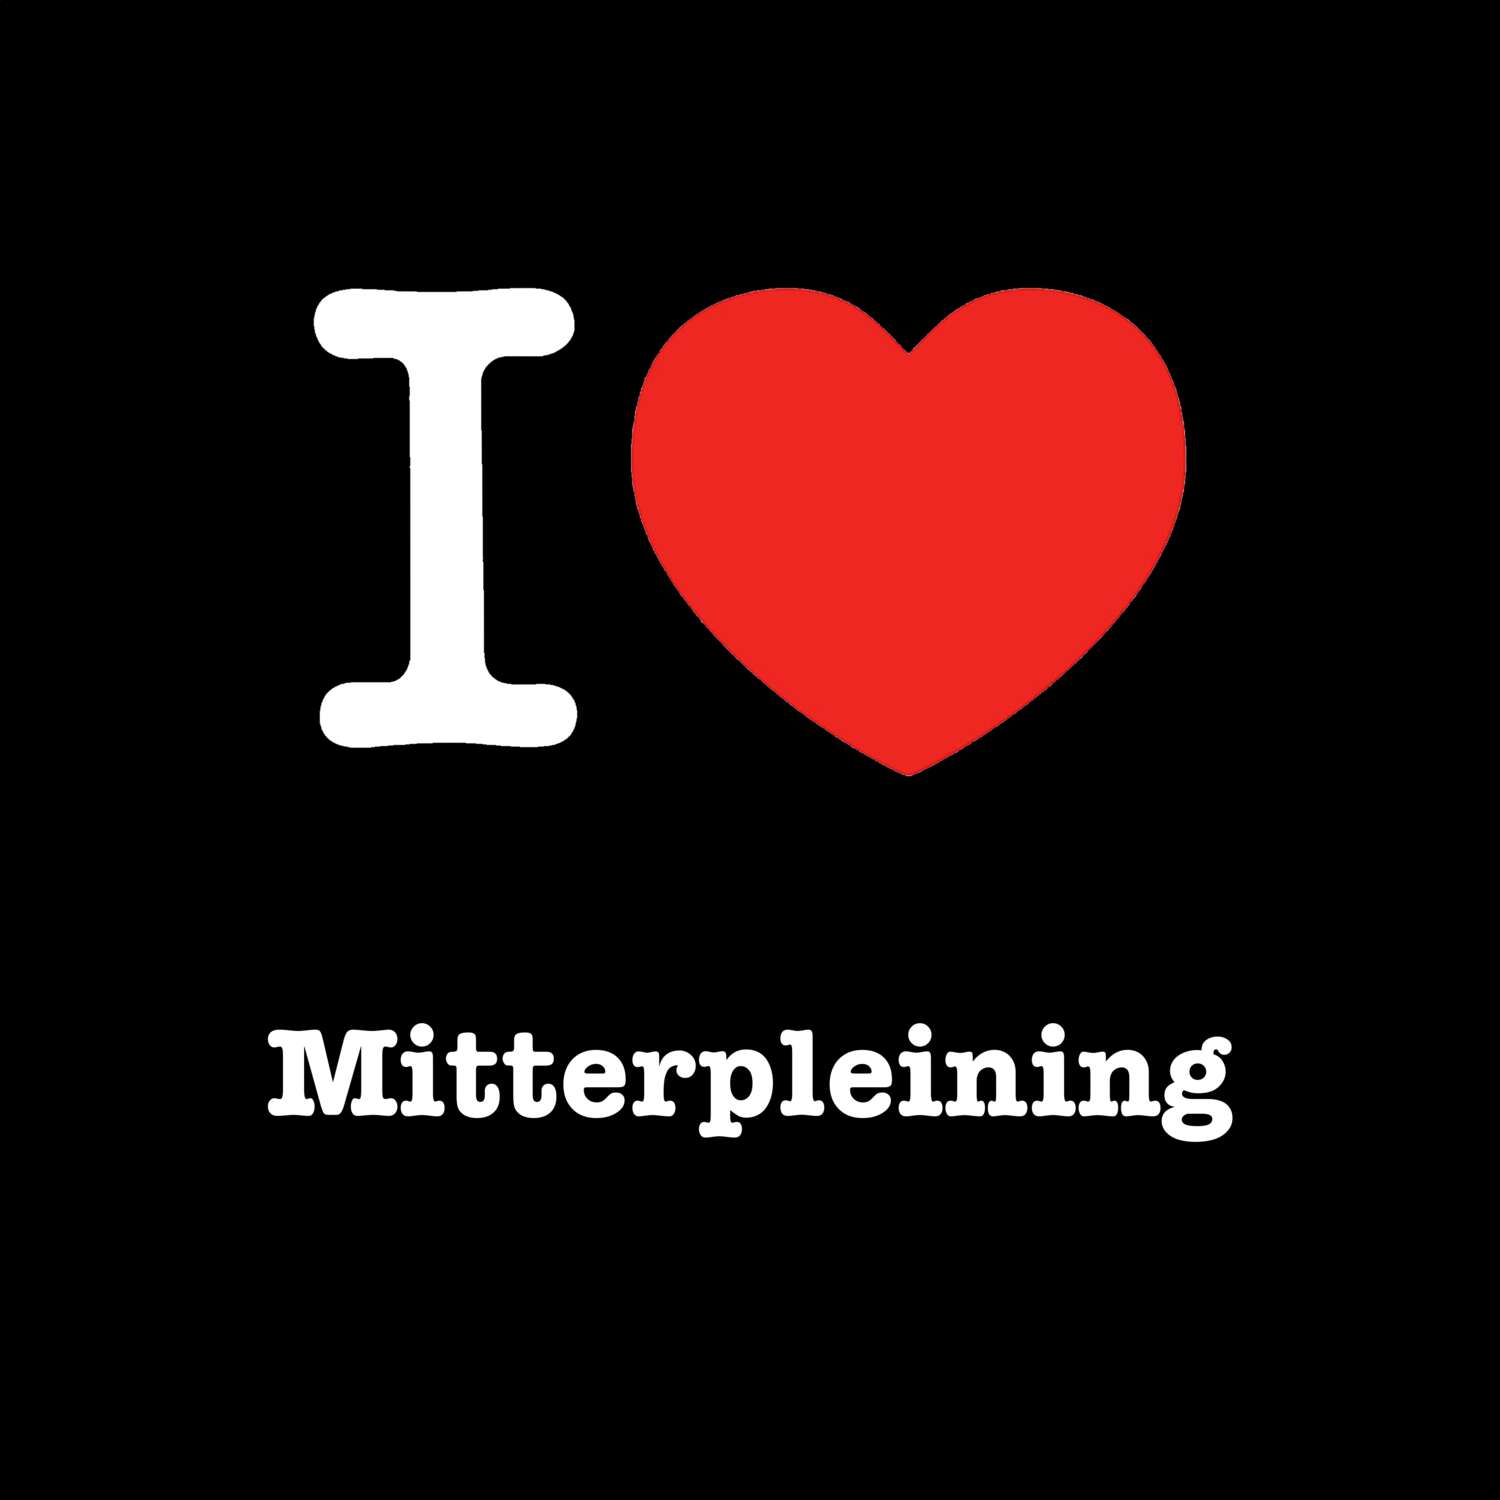 Mitterpleining T-Shirt »I love«